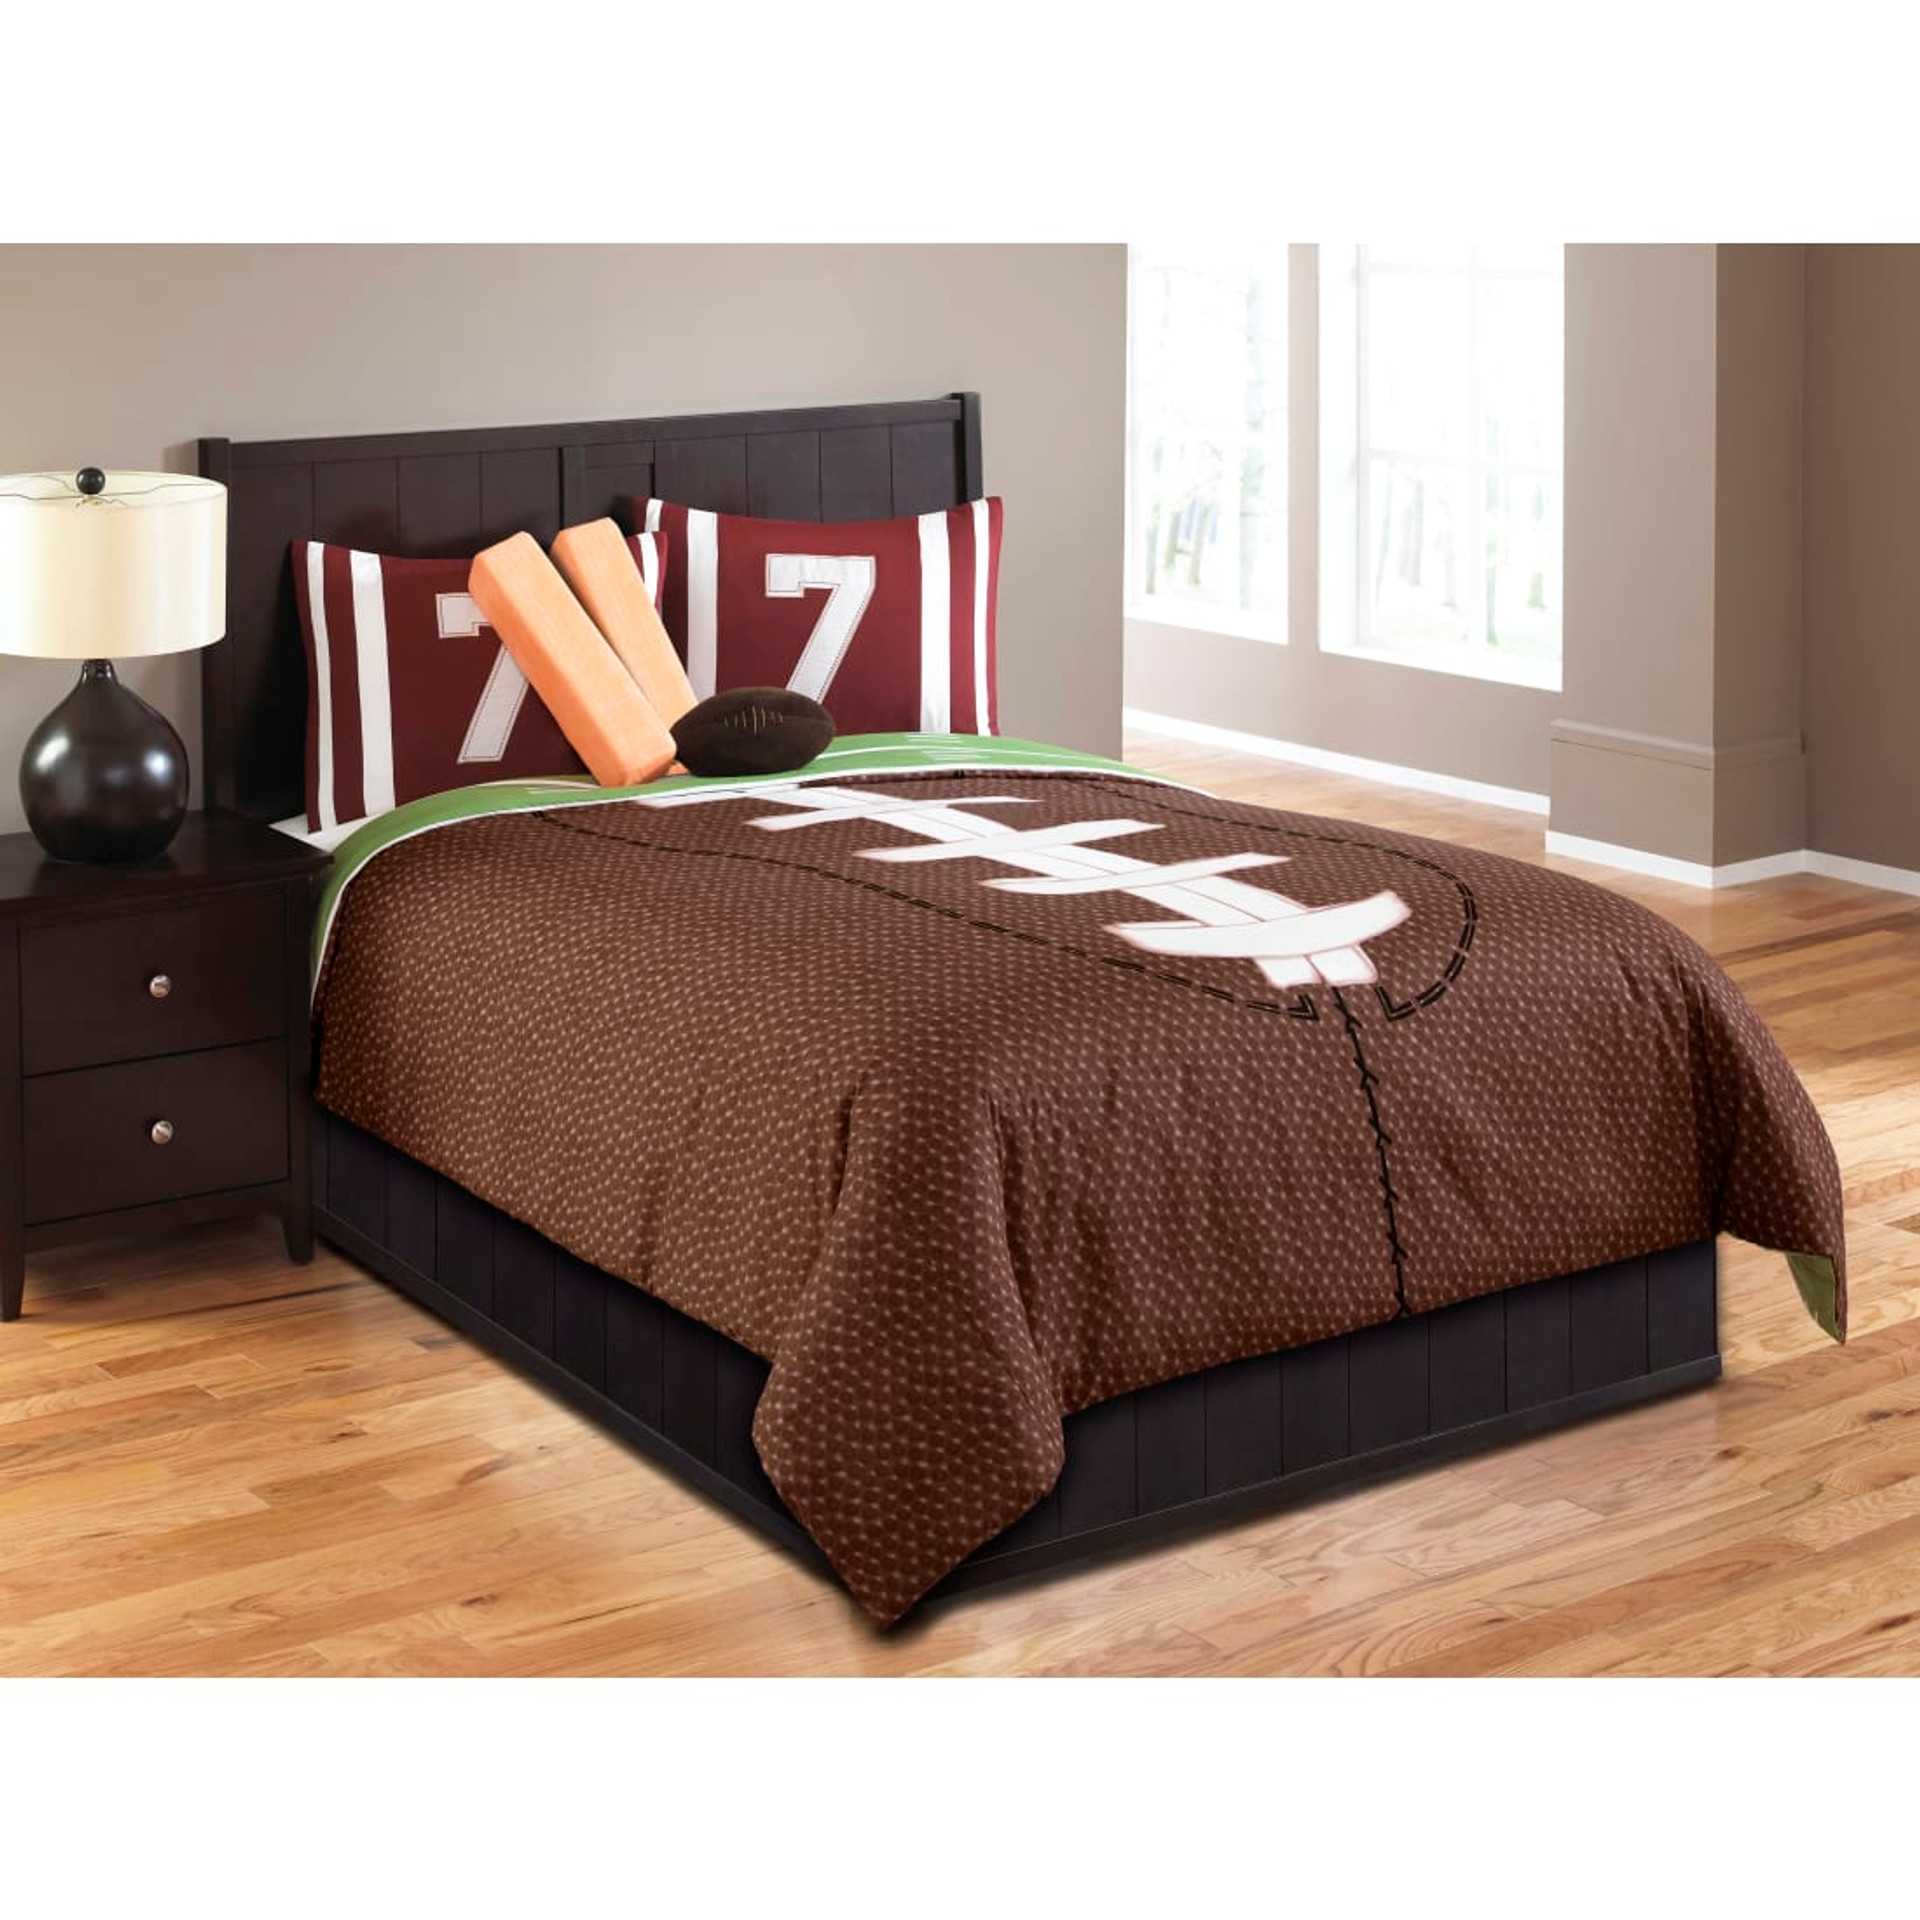 Buy Red Zone 6 Piece Comforter Set -Full | Conn's HomePlus